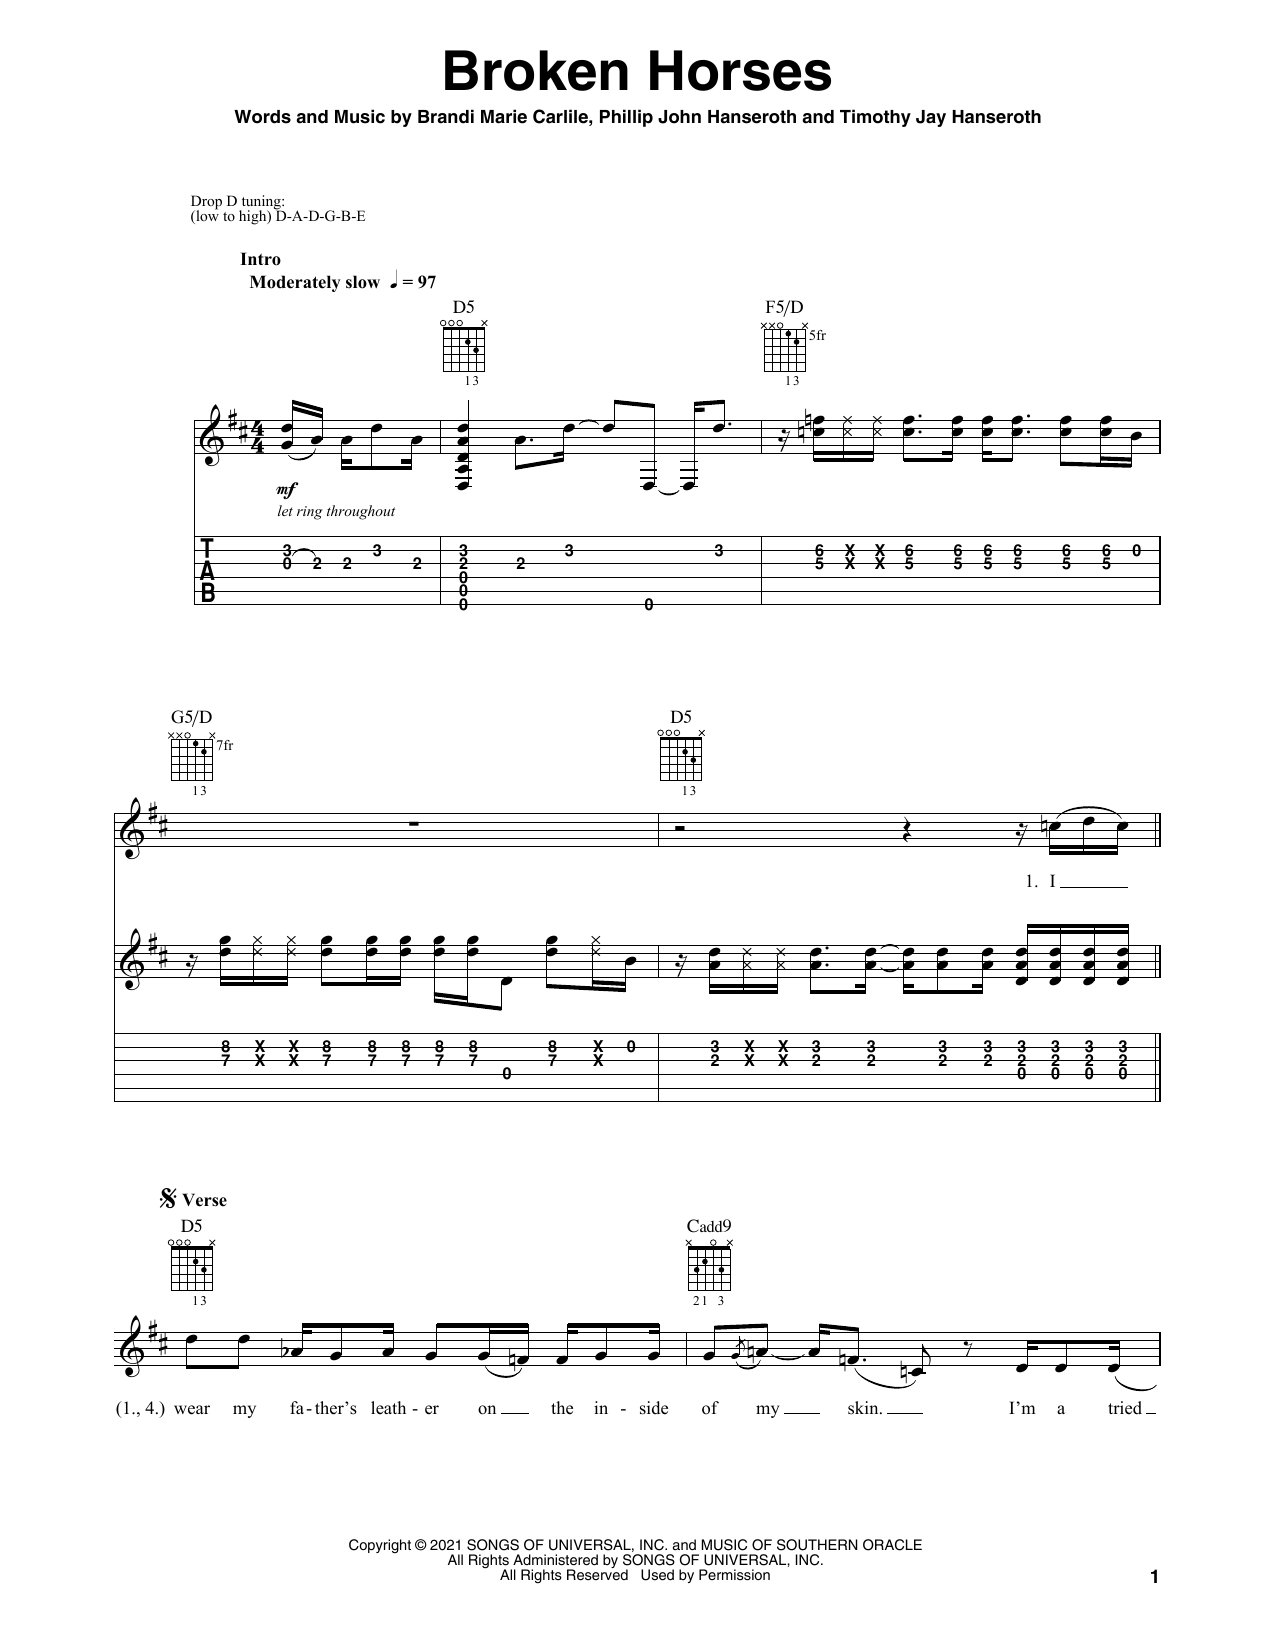 Brandi Carlile Broken Horses Sheet Music Notes & Chords for Solo Guitar - Download or Print PDF